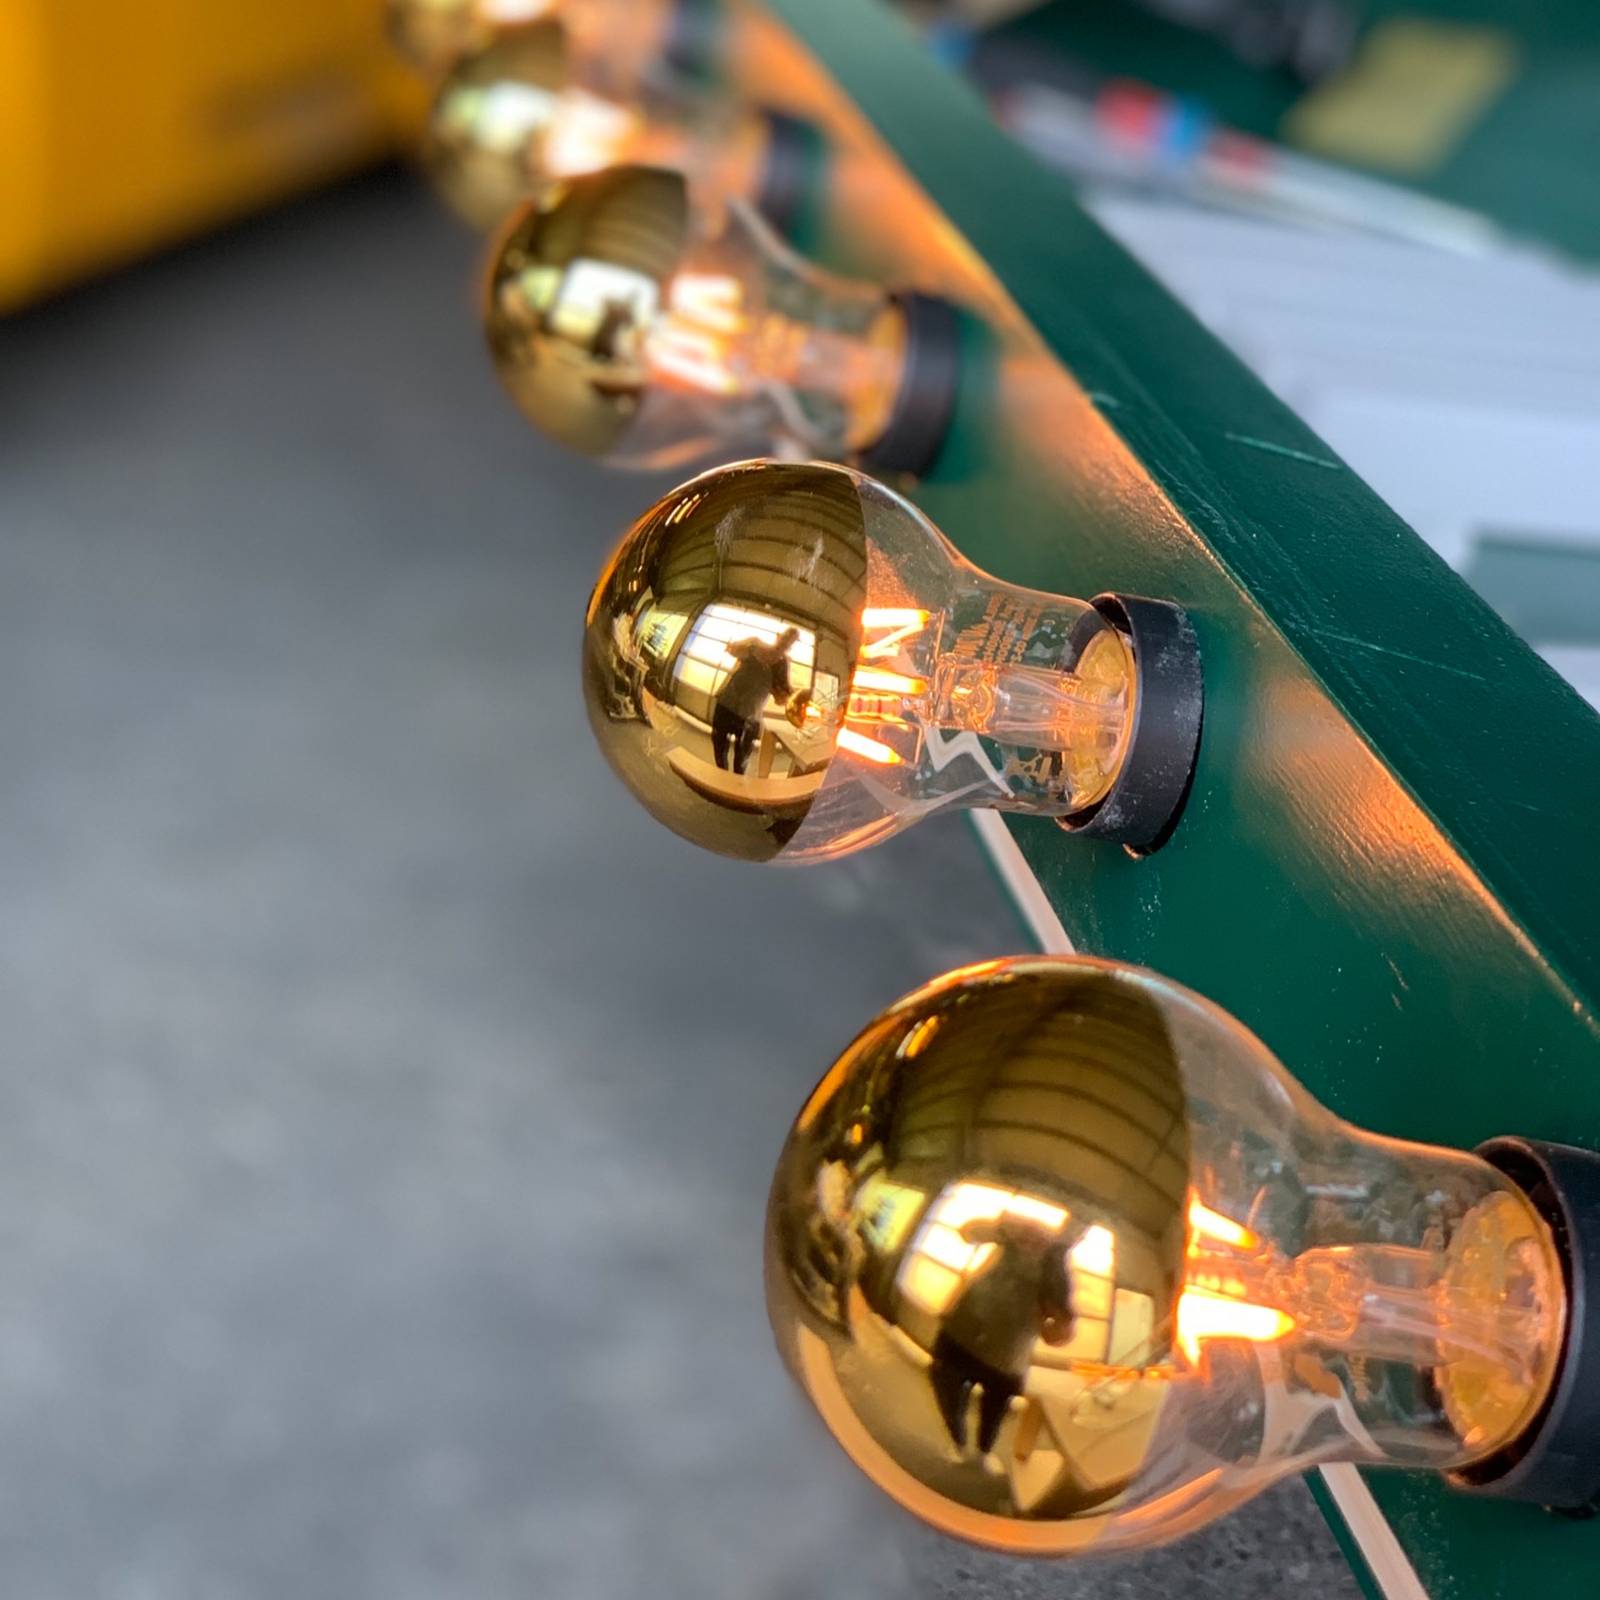 SEGULA LED-lampa E27 3,2W 927 toppspeglad guld